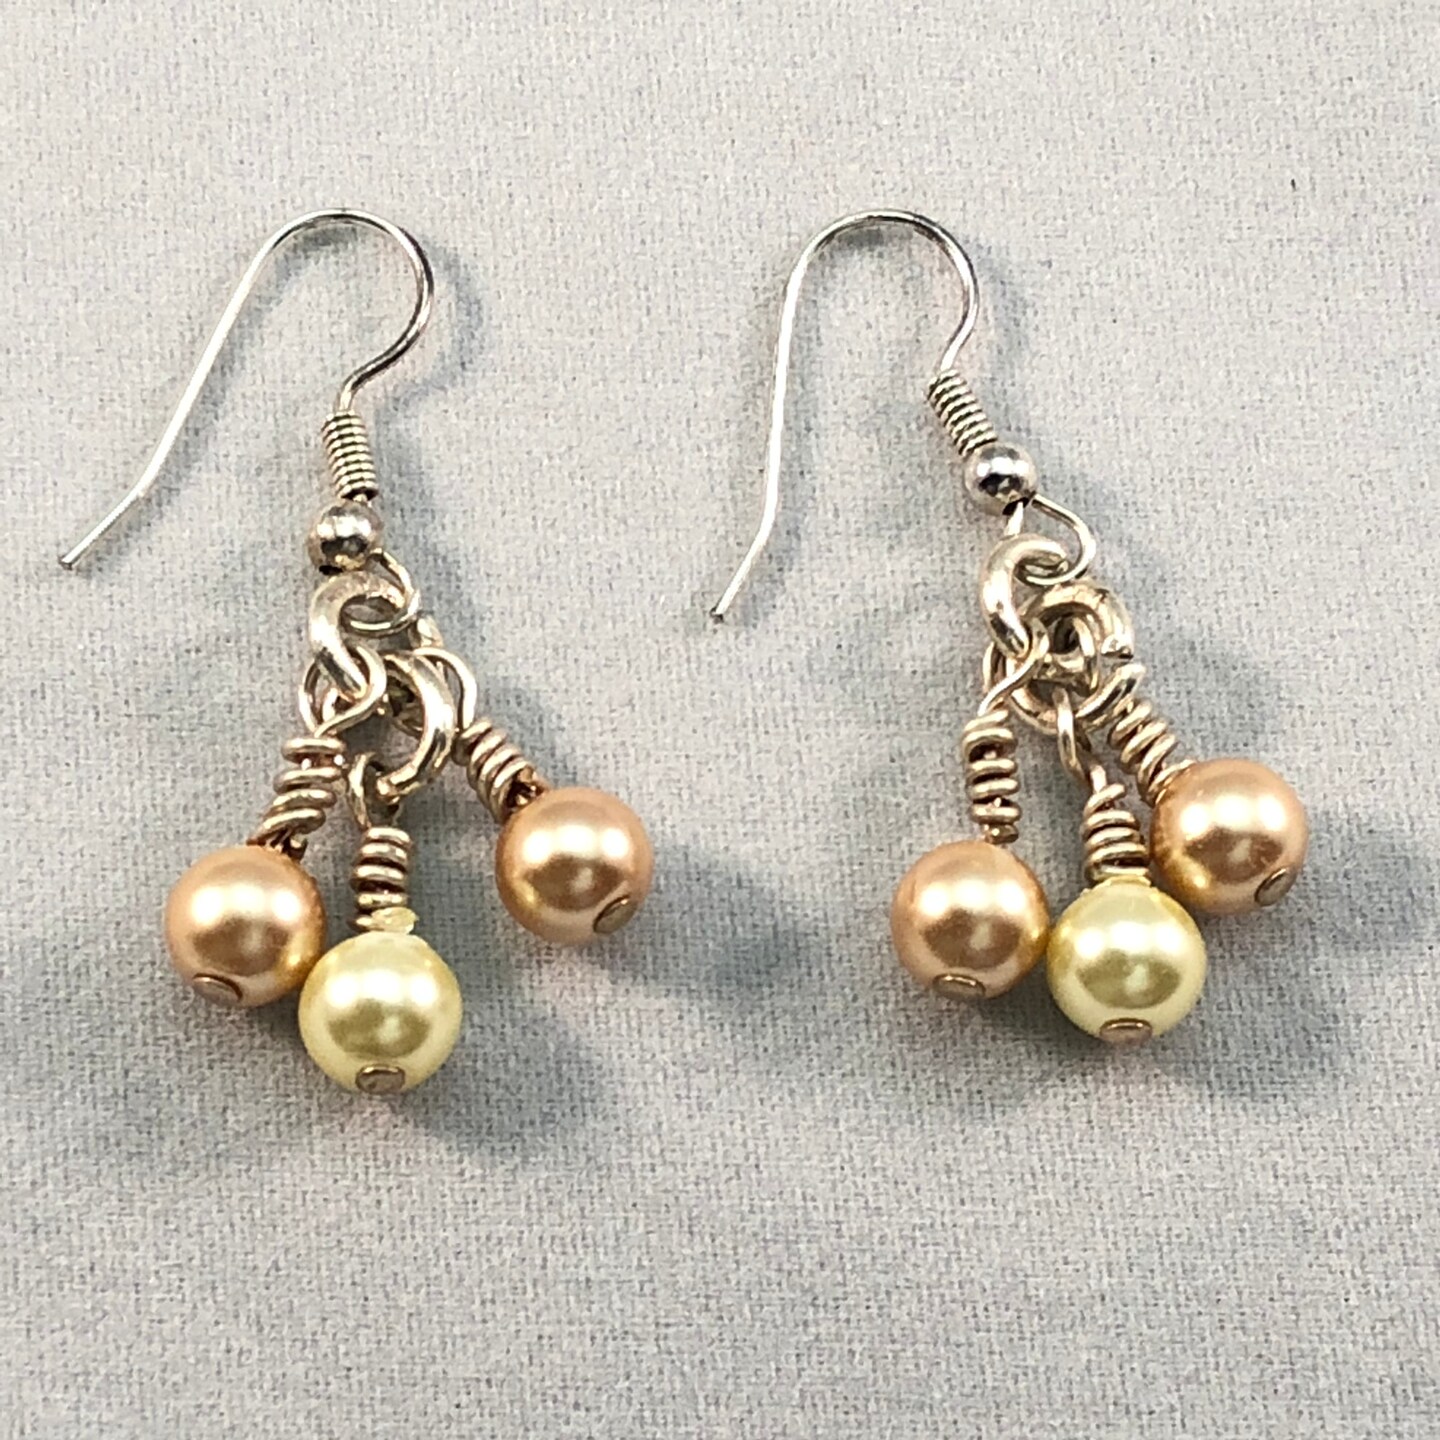 Glass beads and seed beads earrings